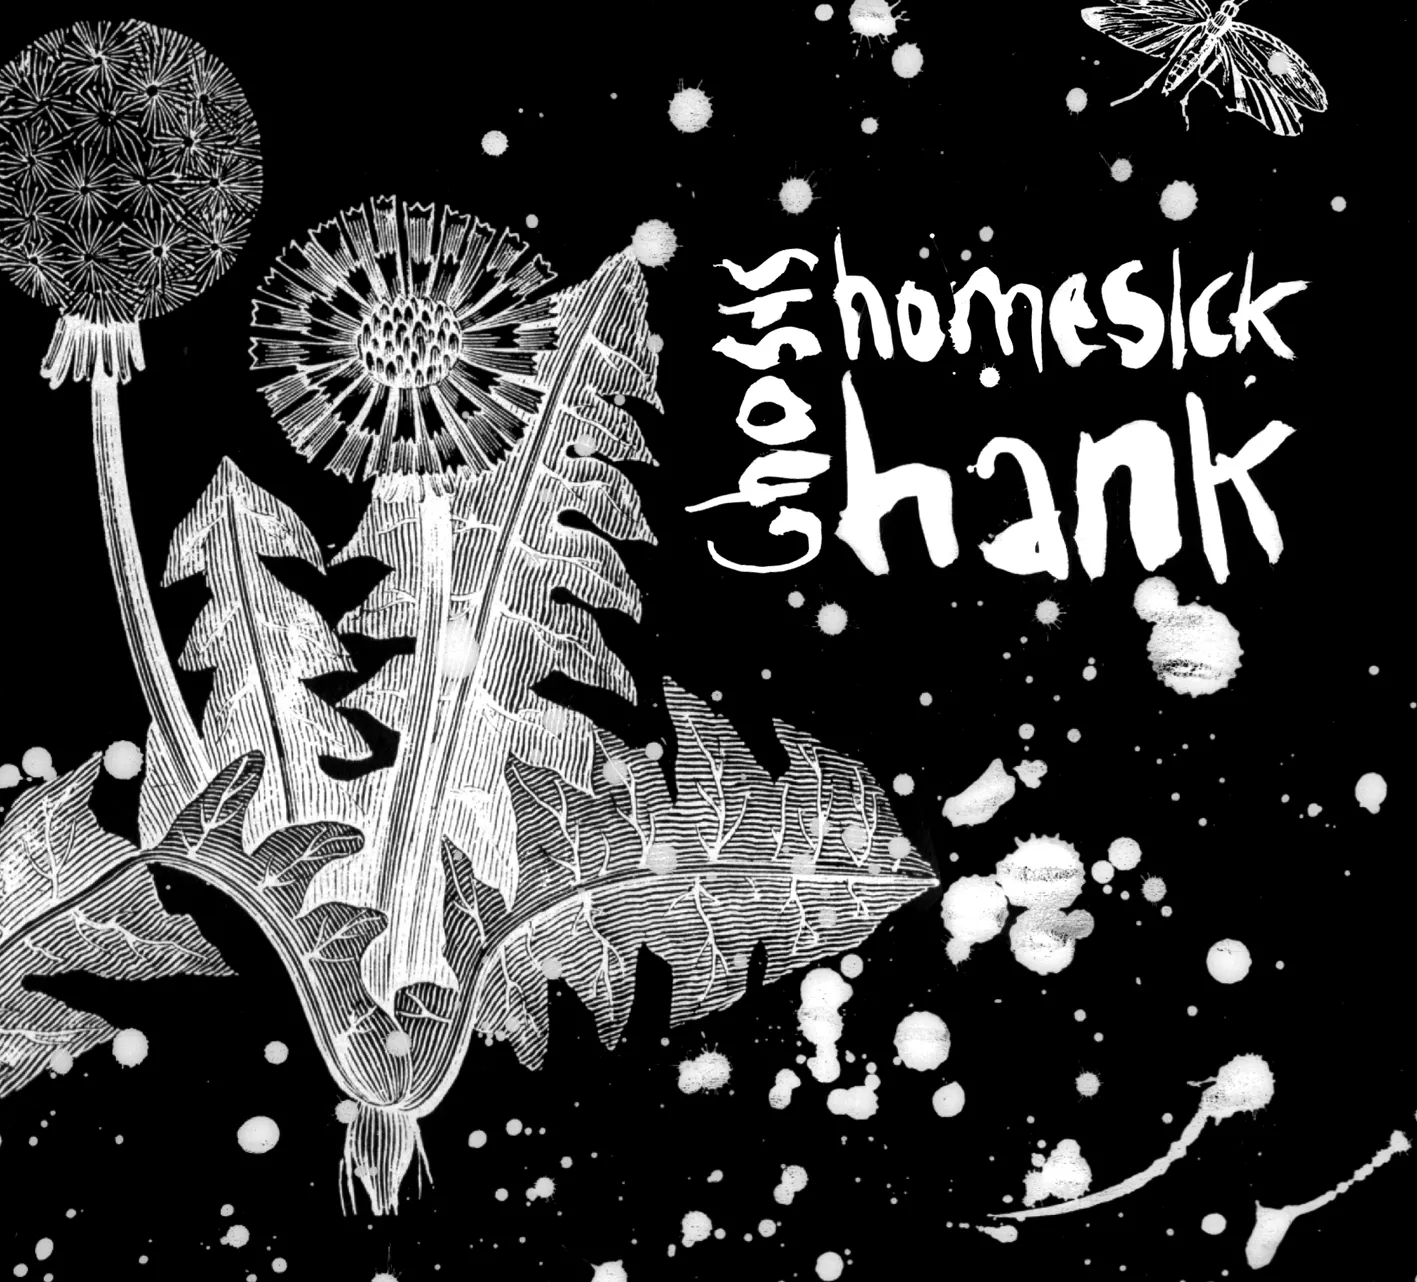 Ghosts - Homesick Hank